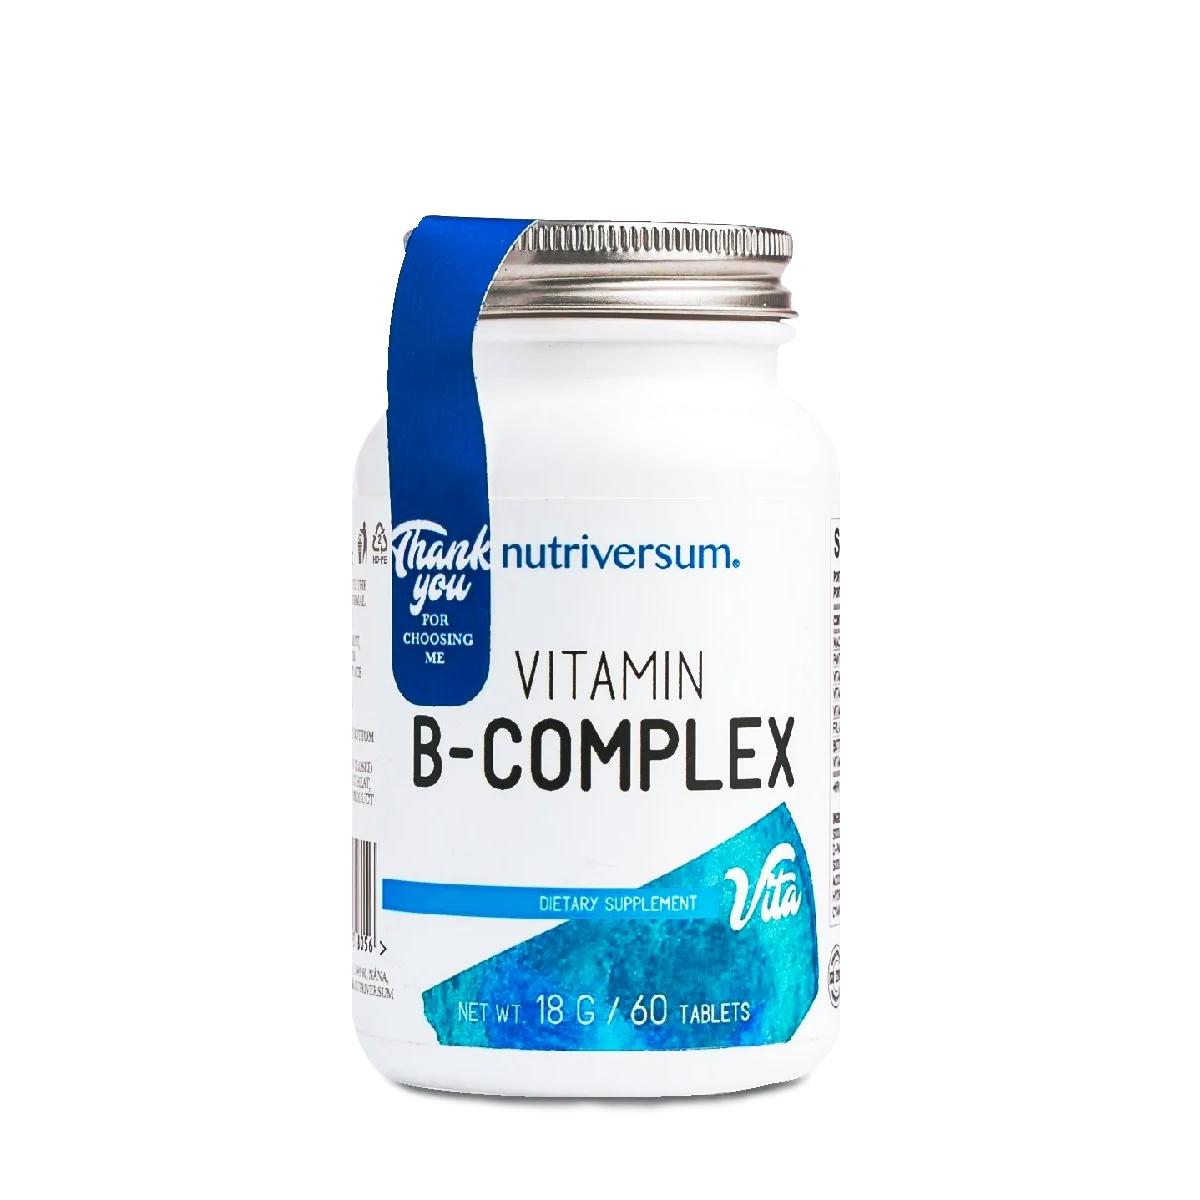 Selected image for NUTRIVERSUM Vitamin B kompleks 60 tableta